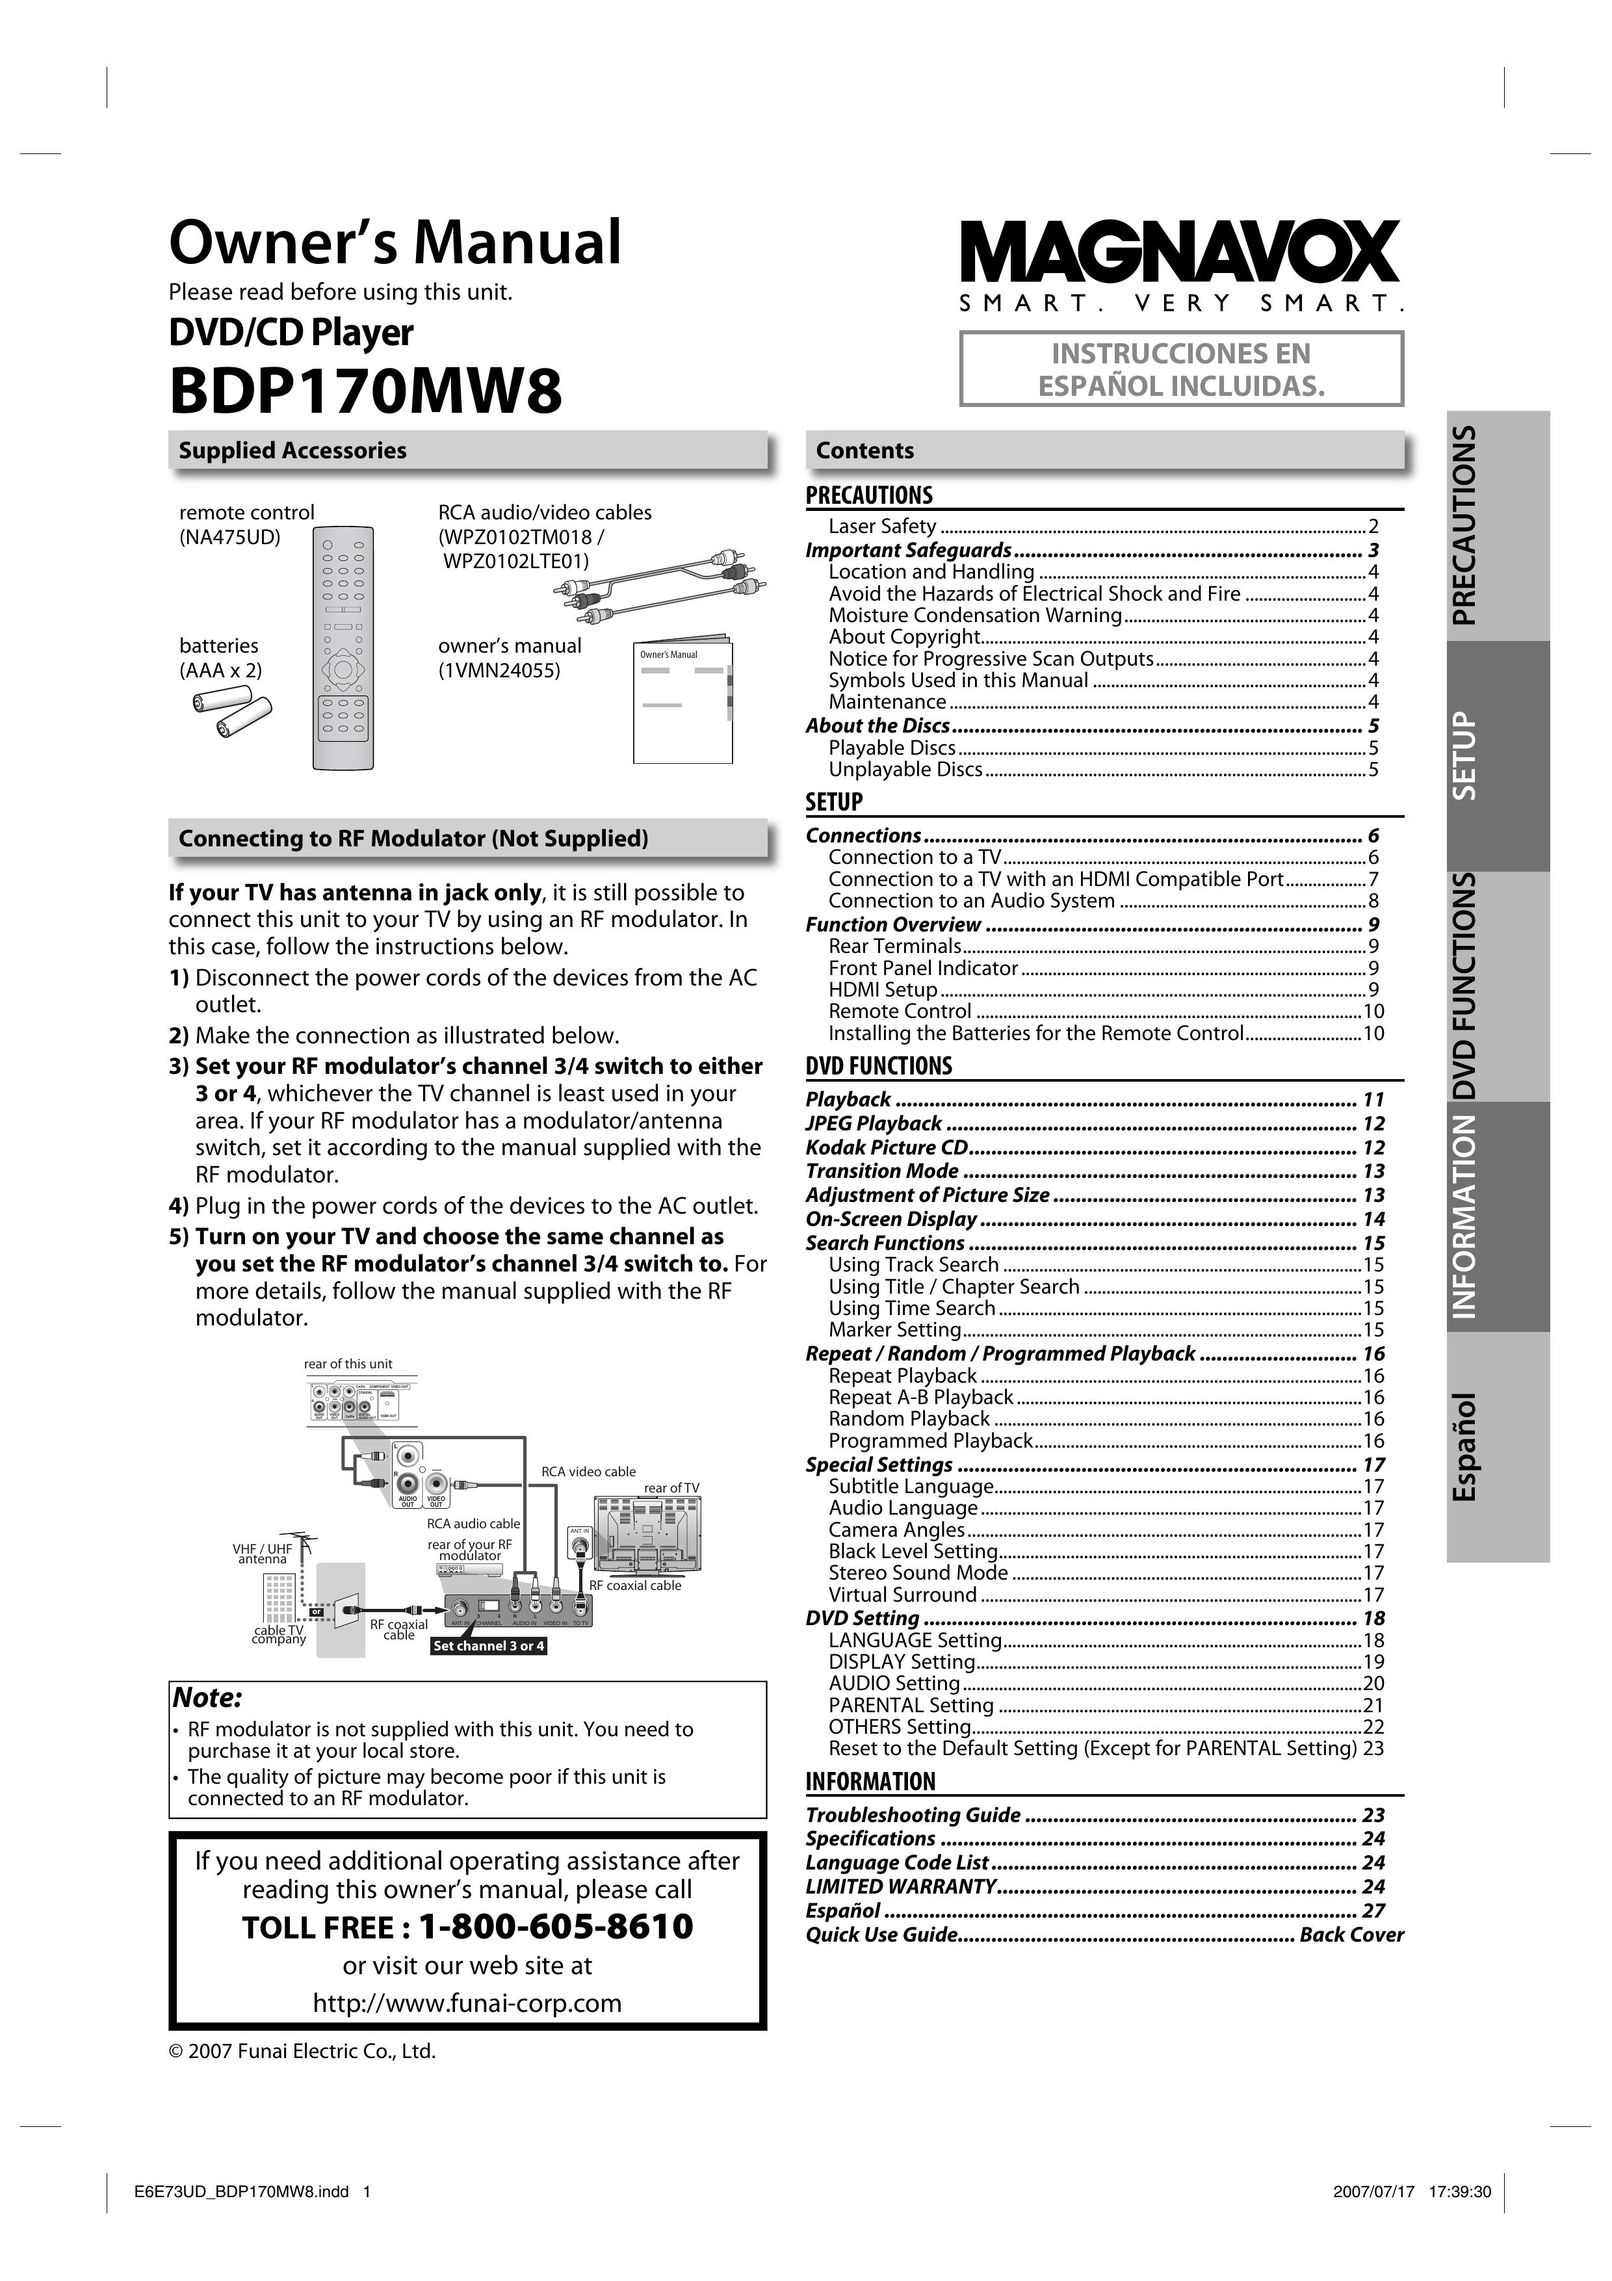 Magnavox BDP170MW8 DVD Player User Manual